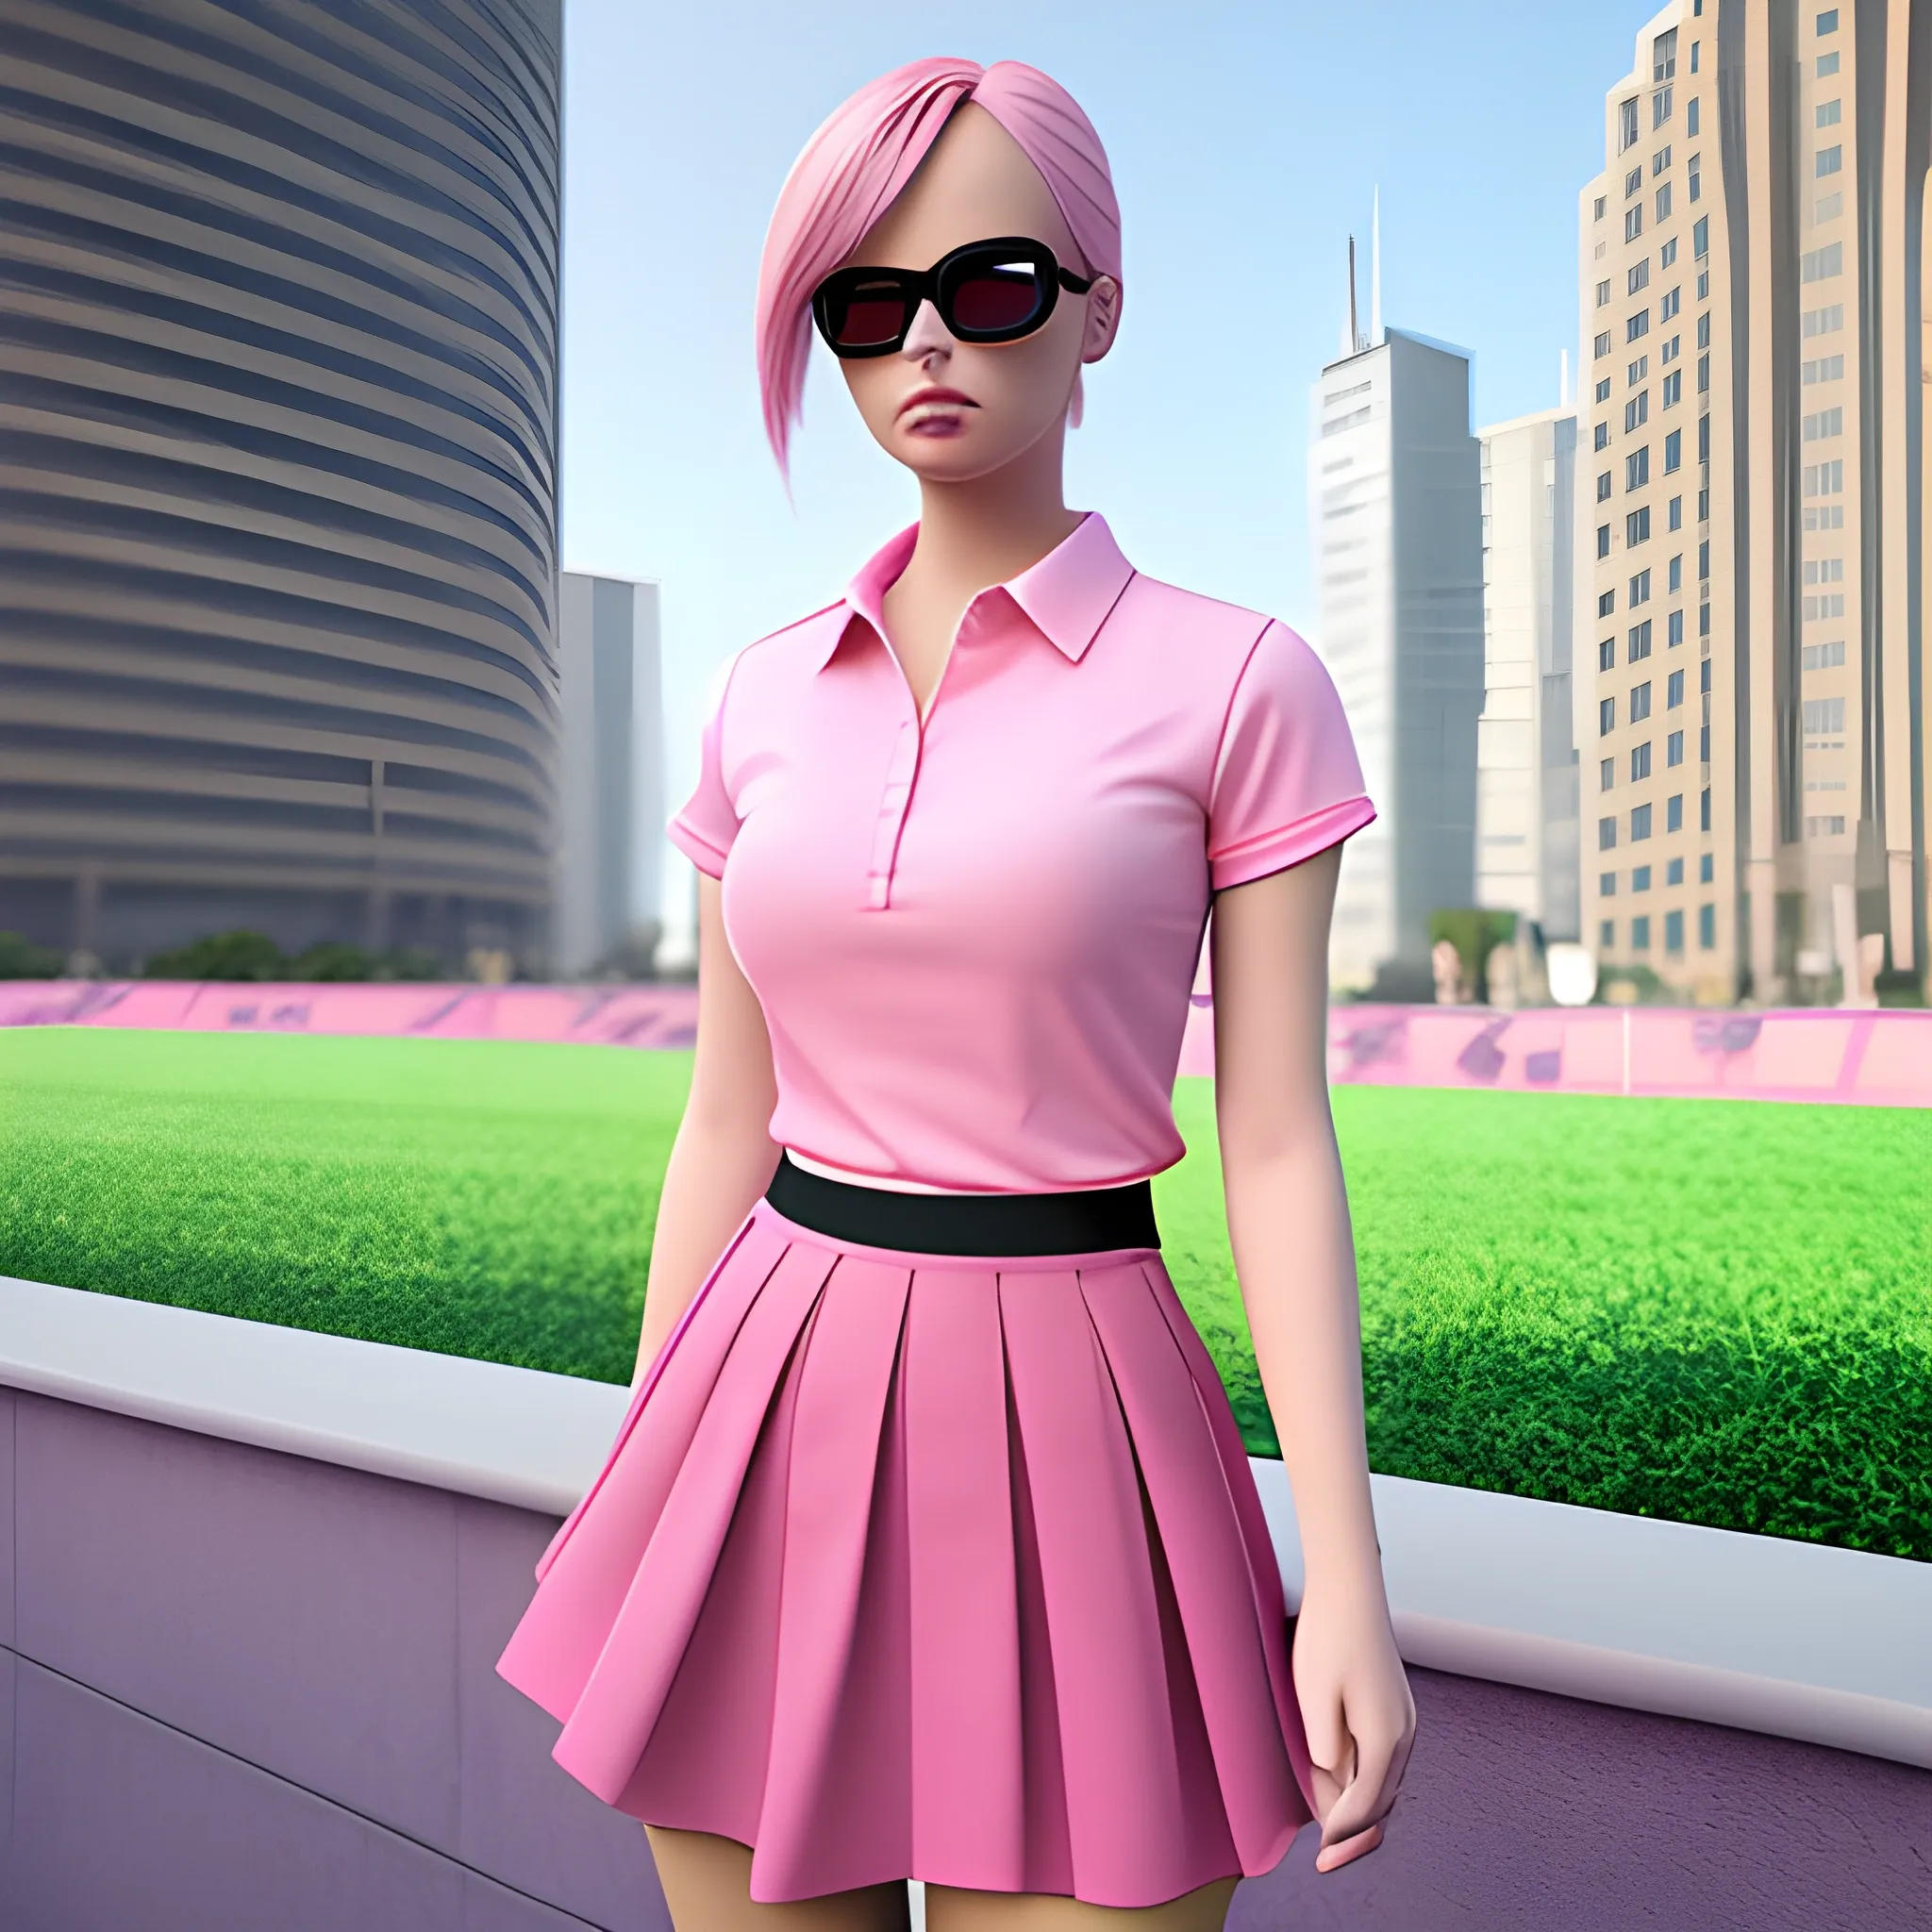 pink shirt and skirt at city, 3D